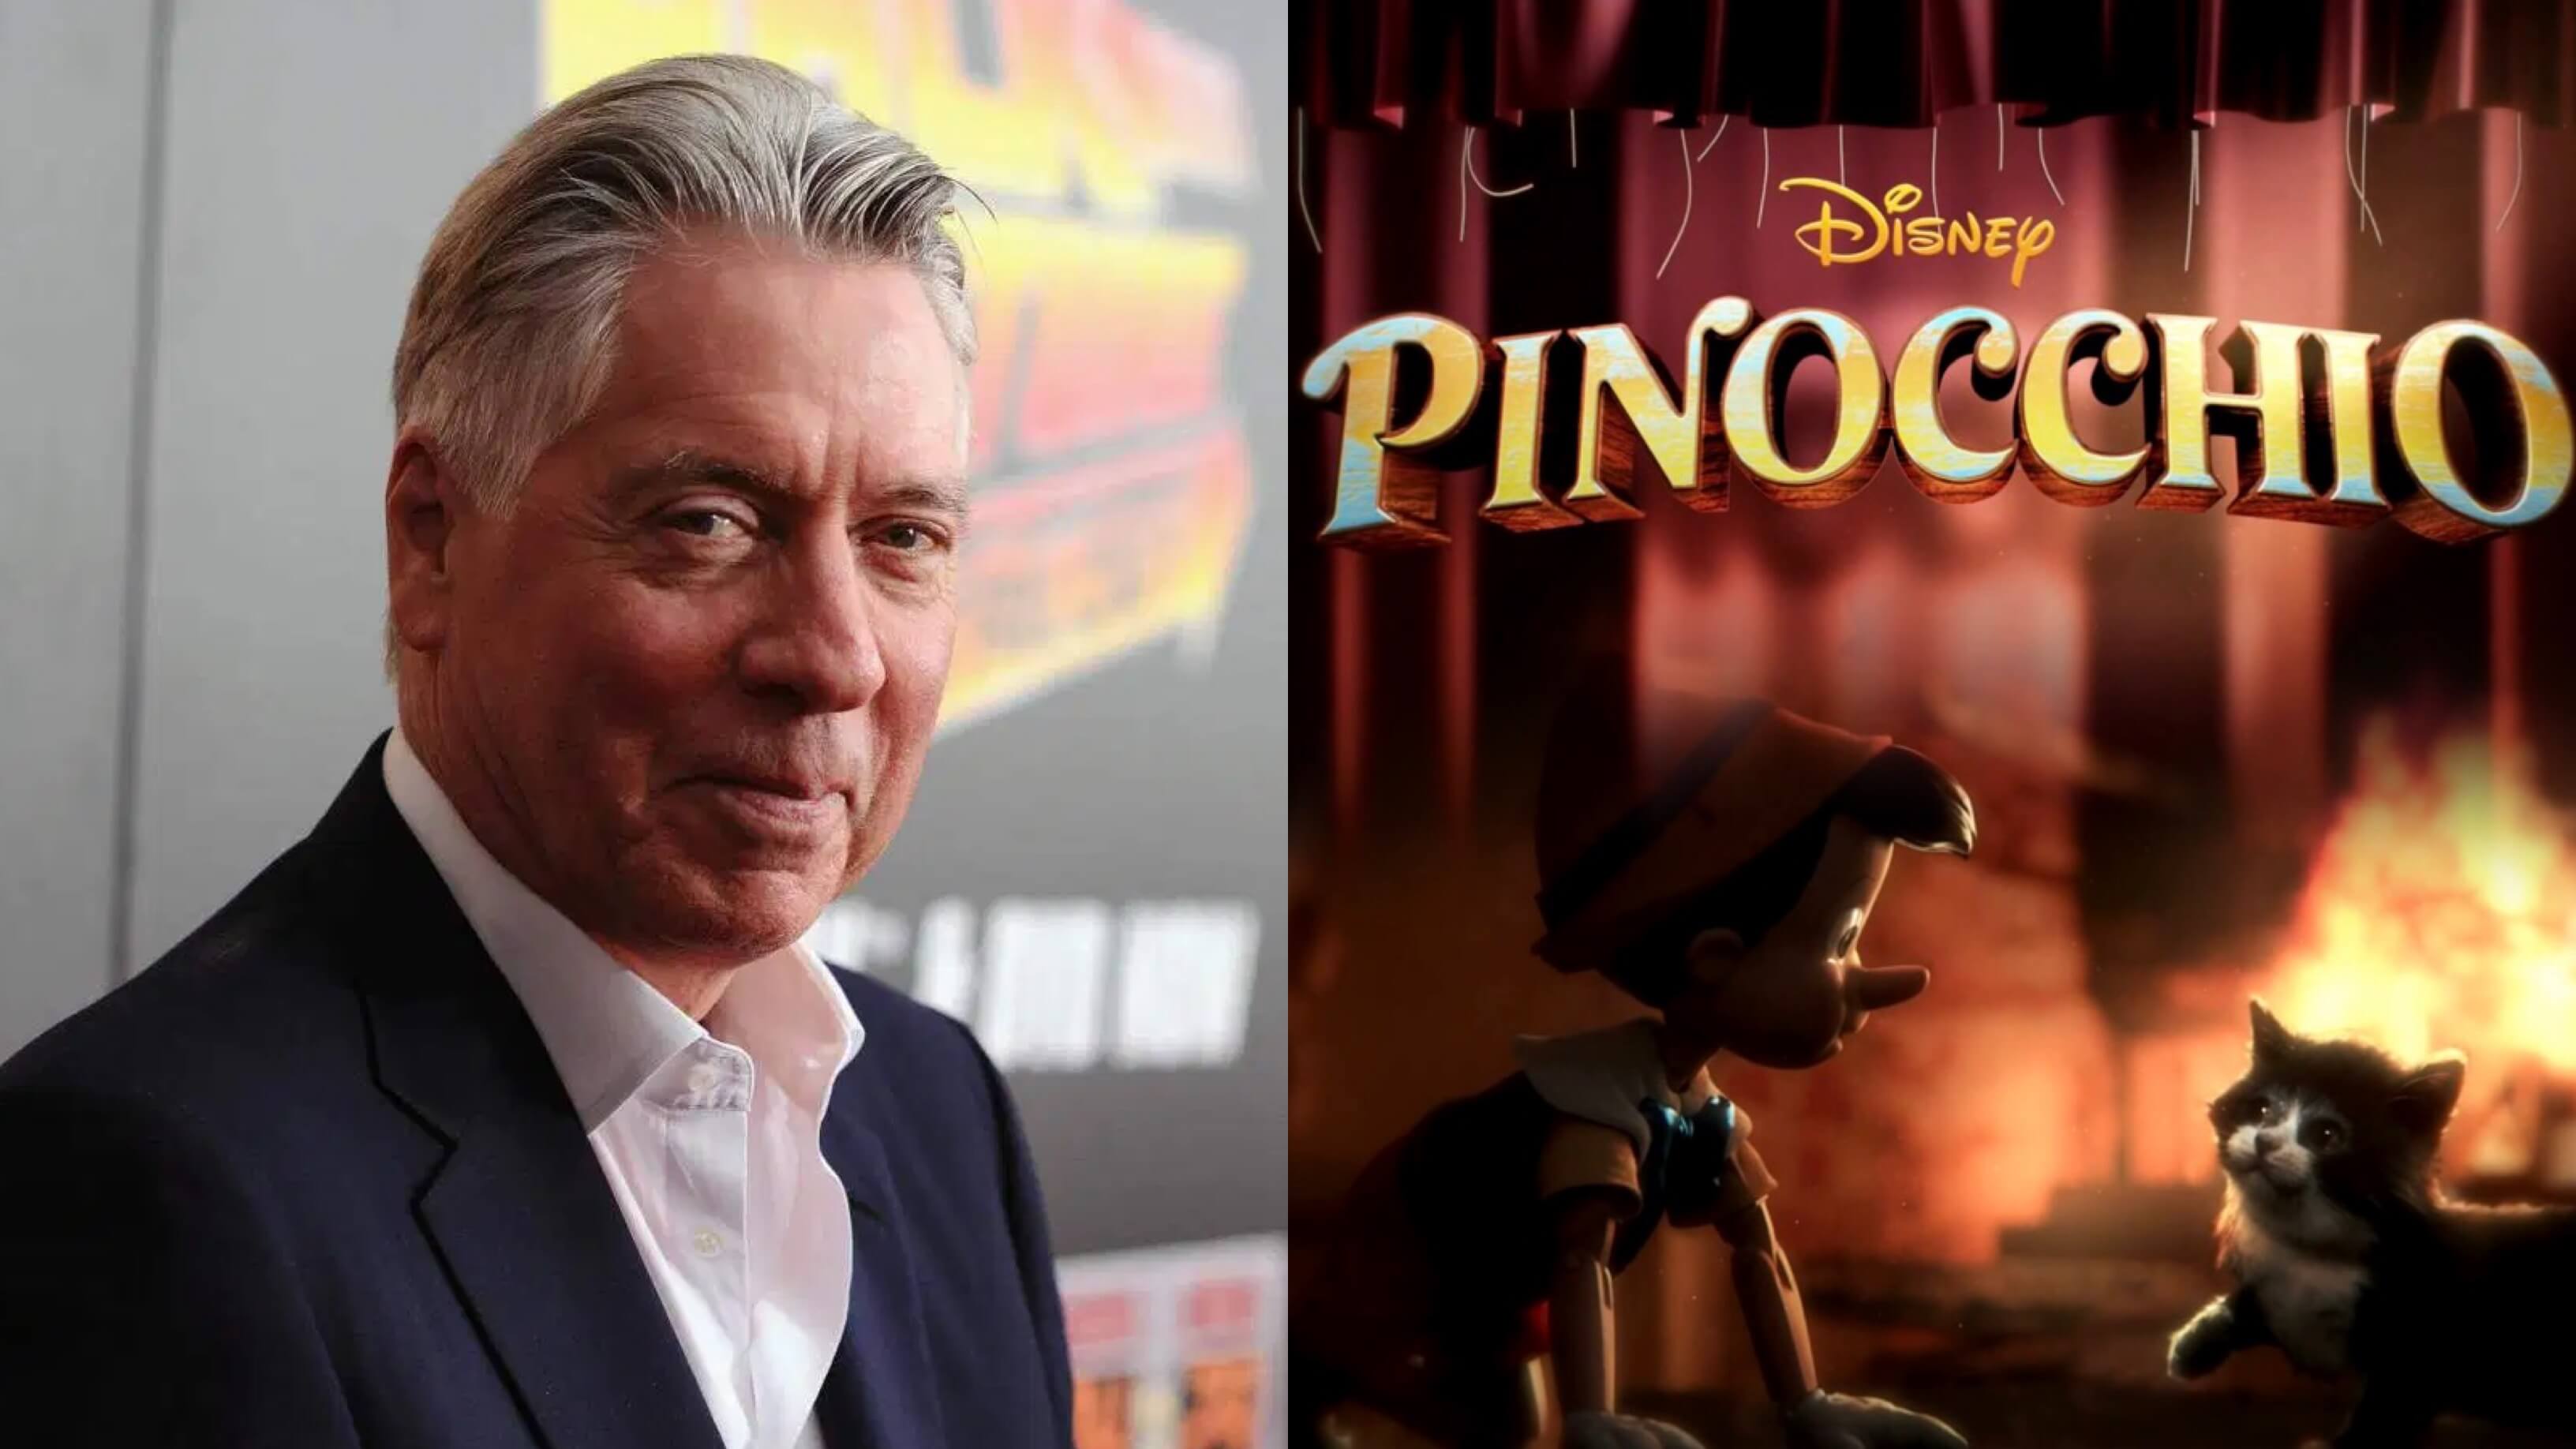 Exclusive: Alan Silvestri to Compose Disney+’s ‘Pinocchio’ With Glen Ballard Writing New Songs